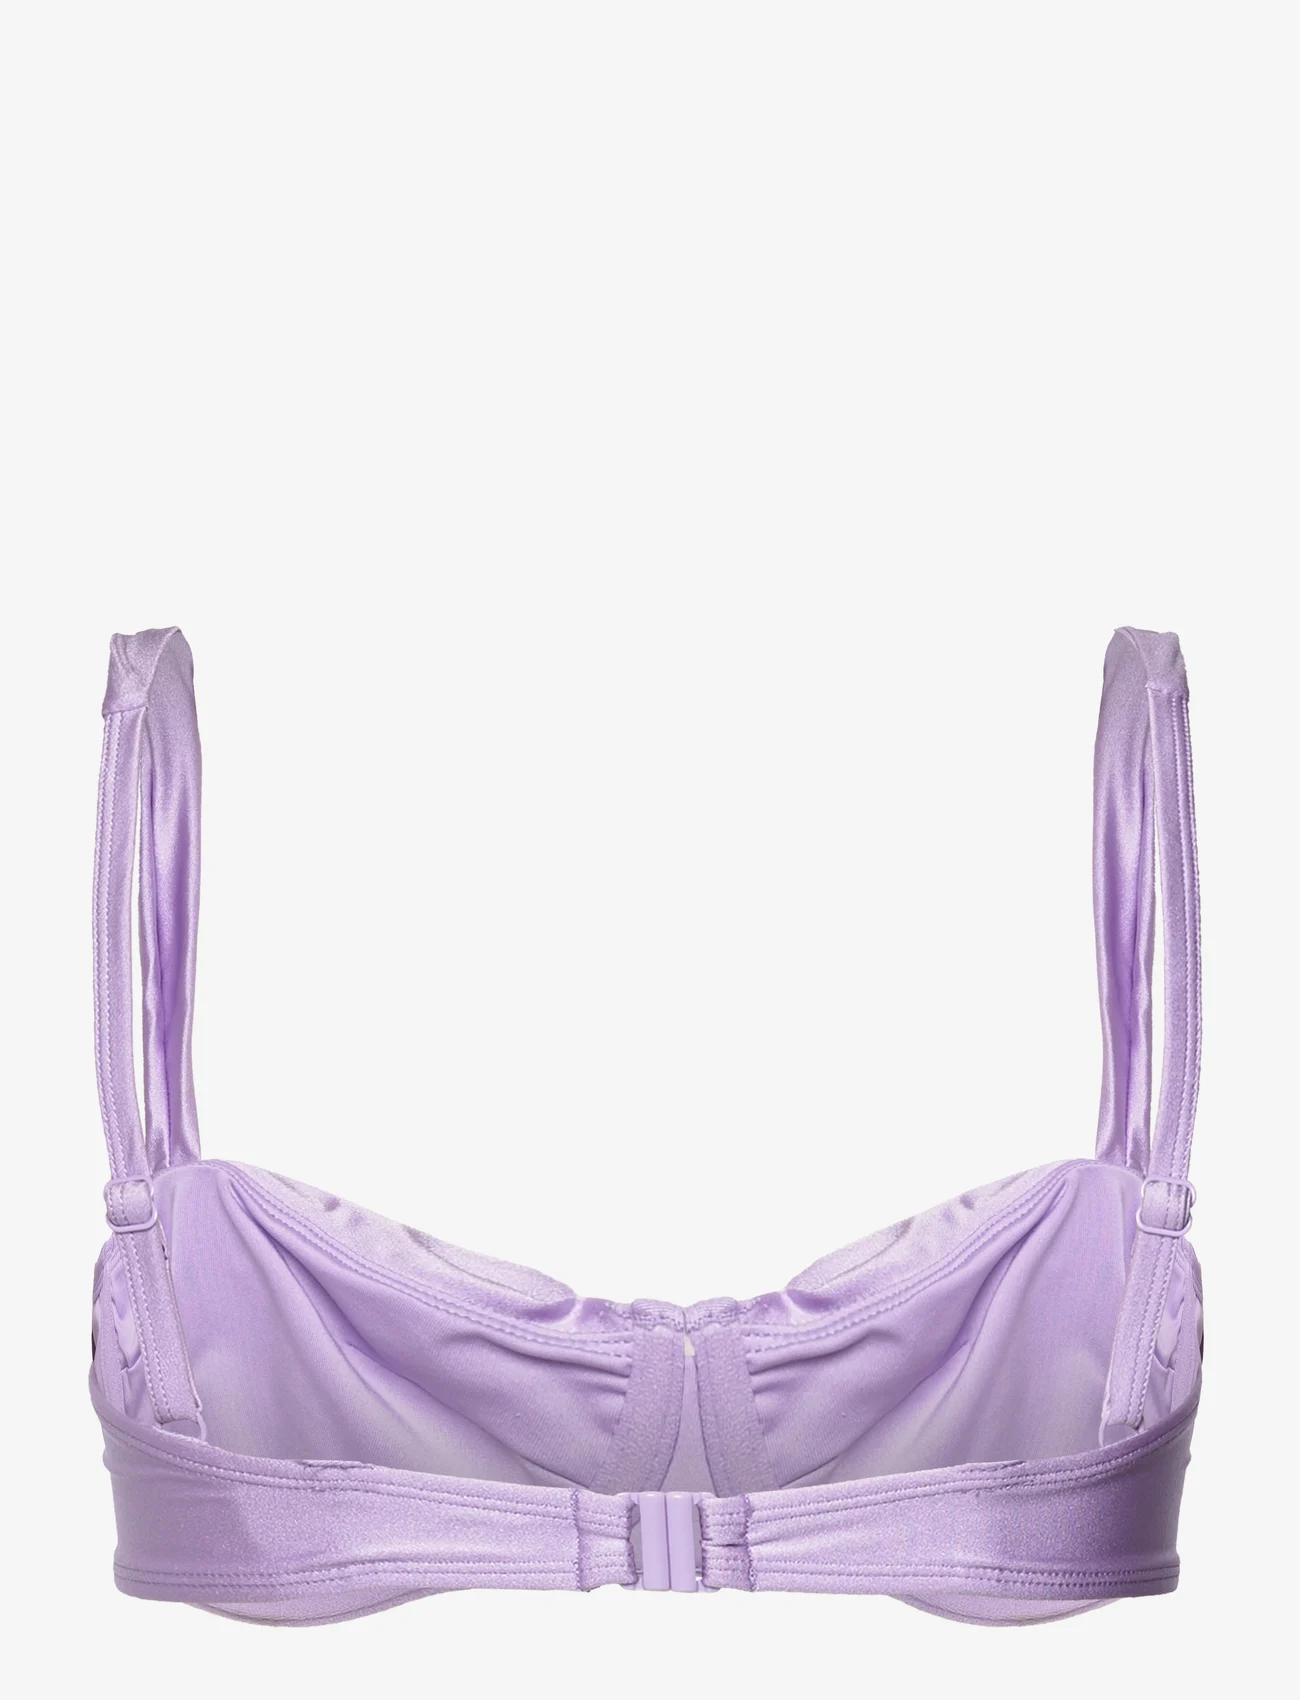 Hunkemöller - Aruba ub - bikini augšiņa ar lencēm - purple rose - 1